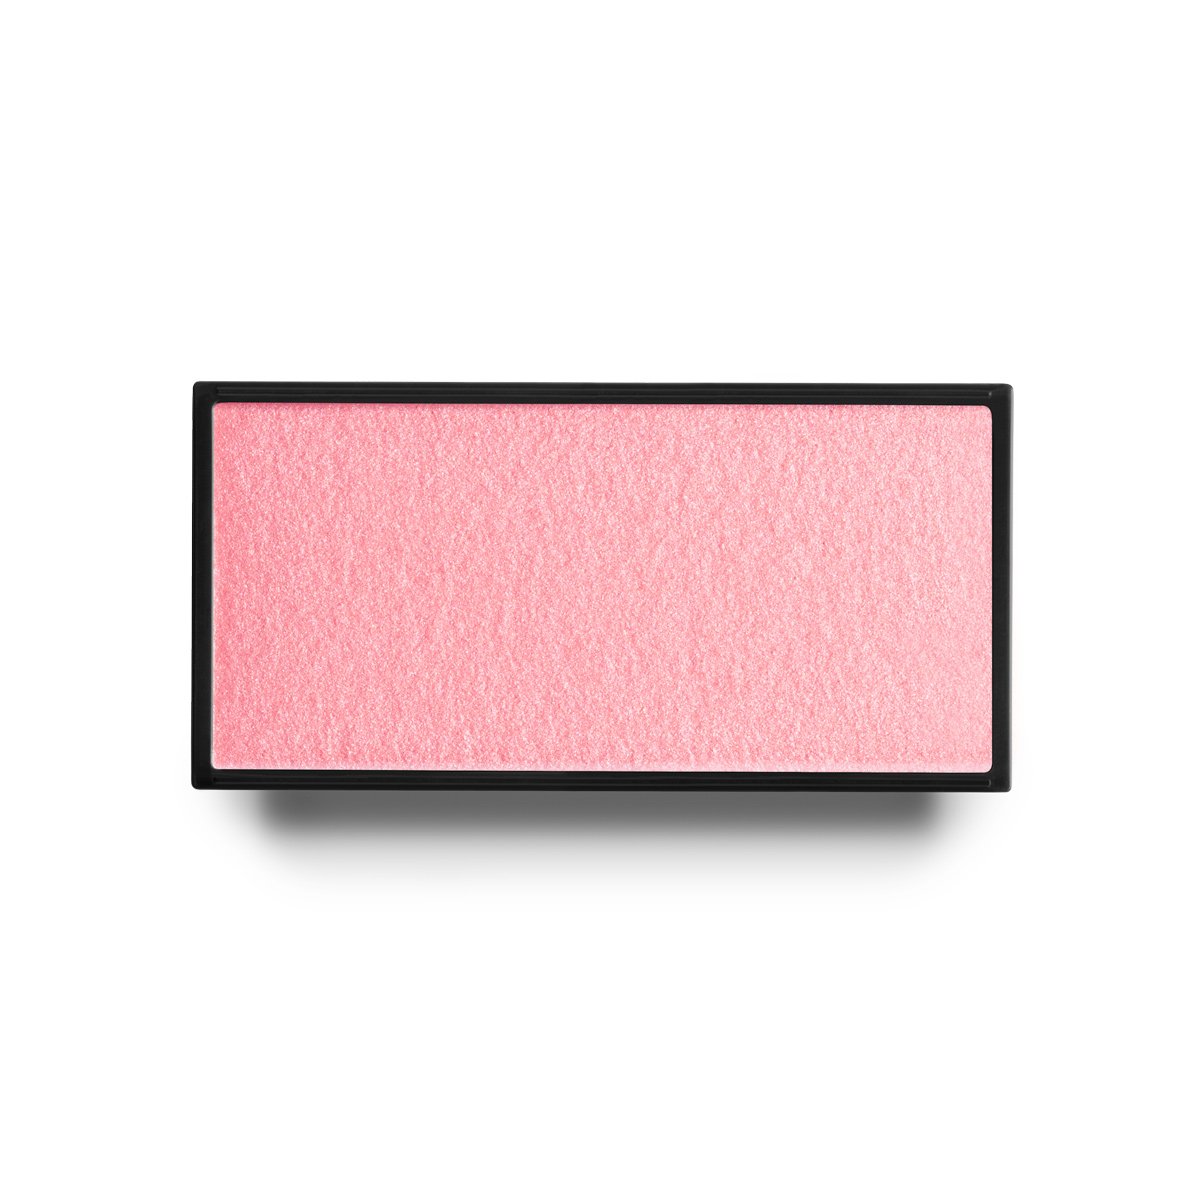 CHERUBIQUE - DUSTY ROSE - shimmer finish powder blush in dusty rose shade